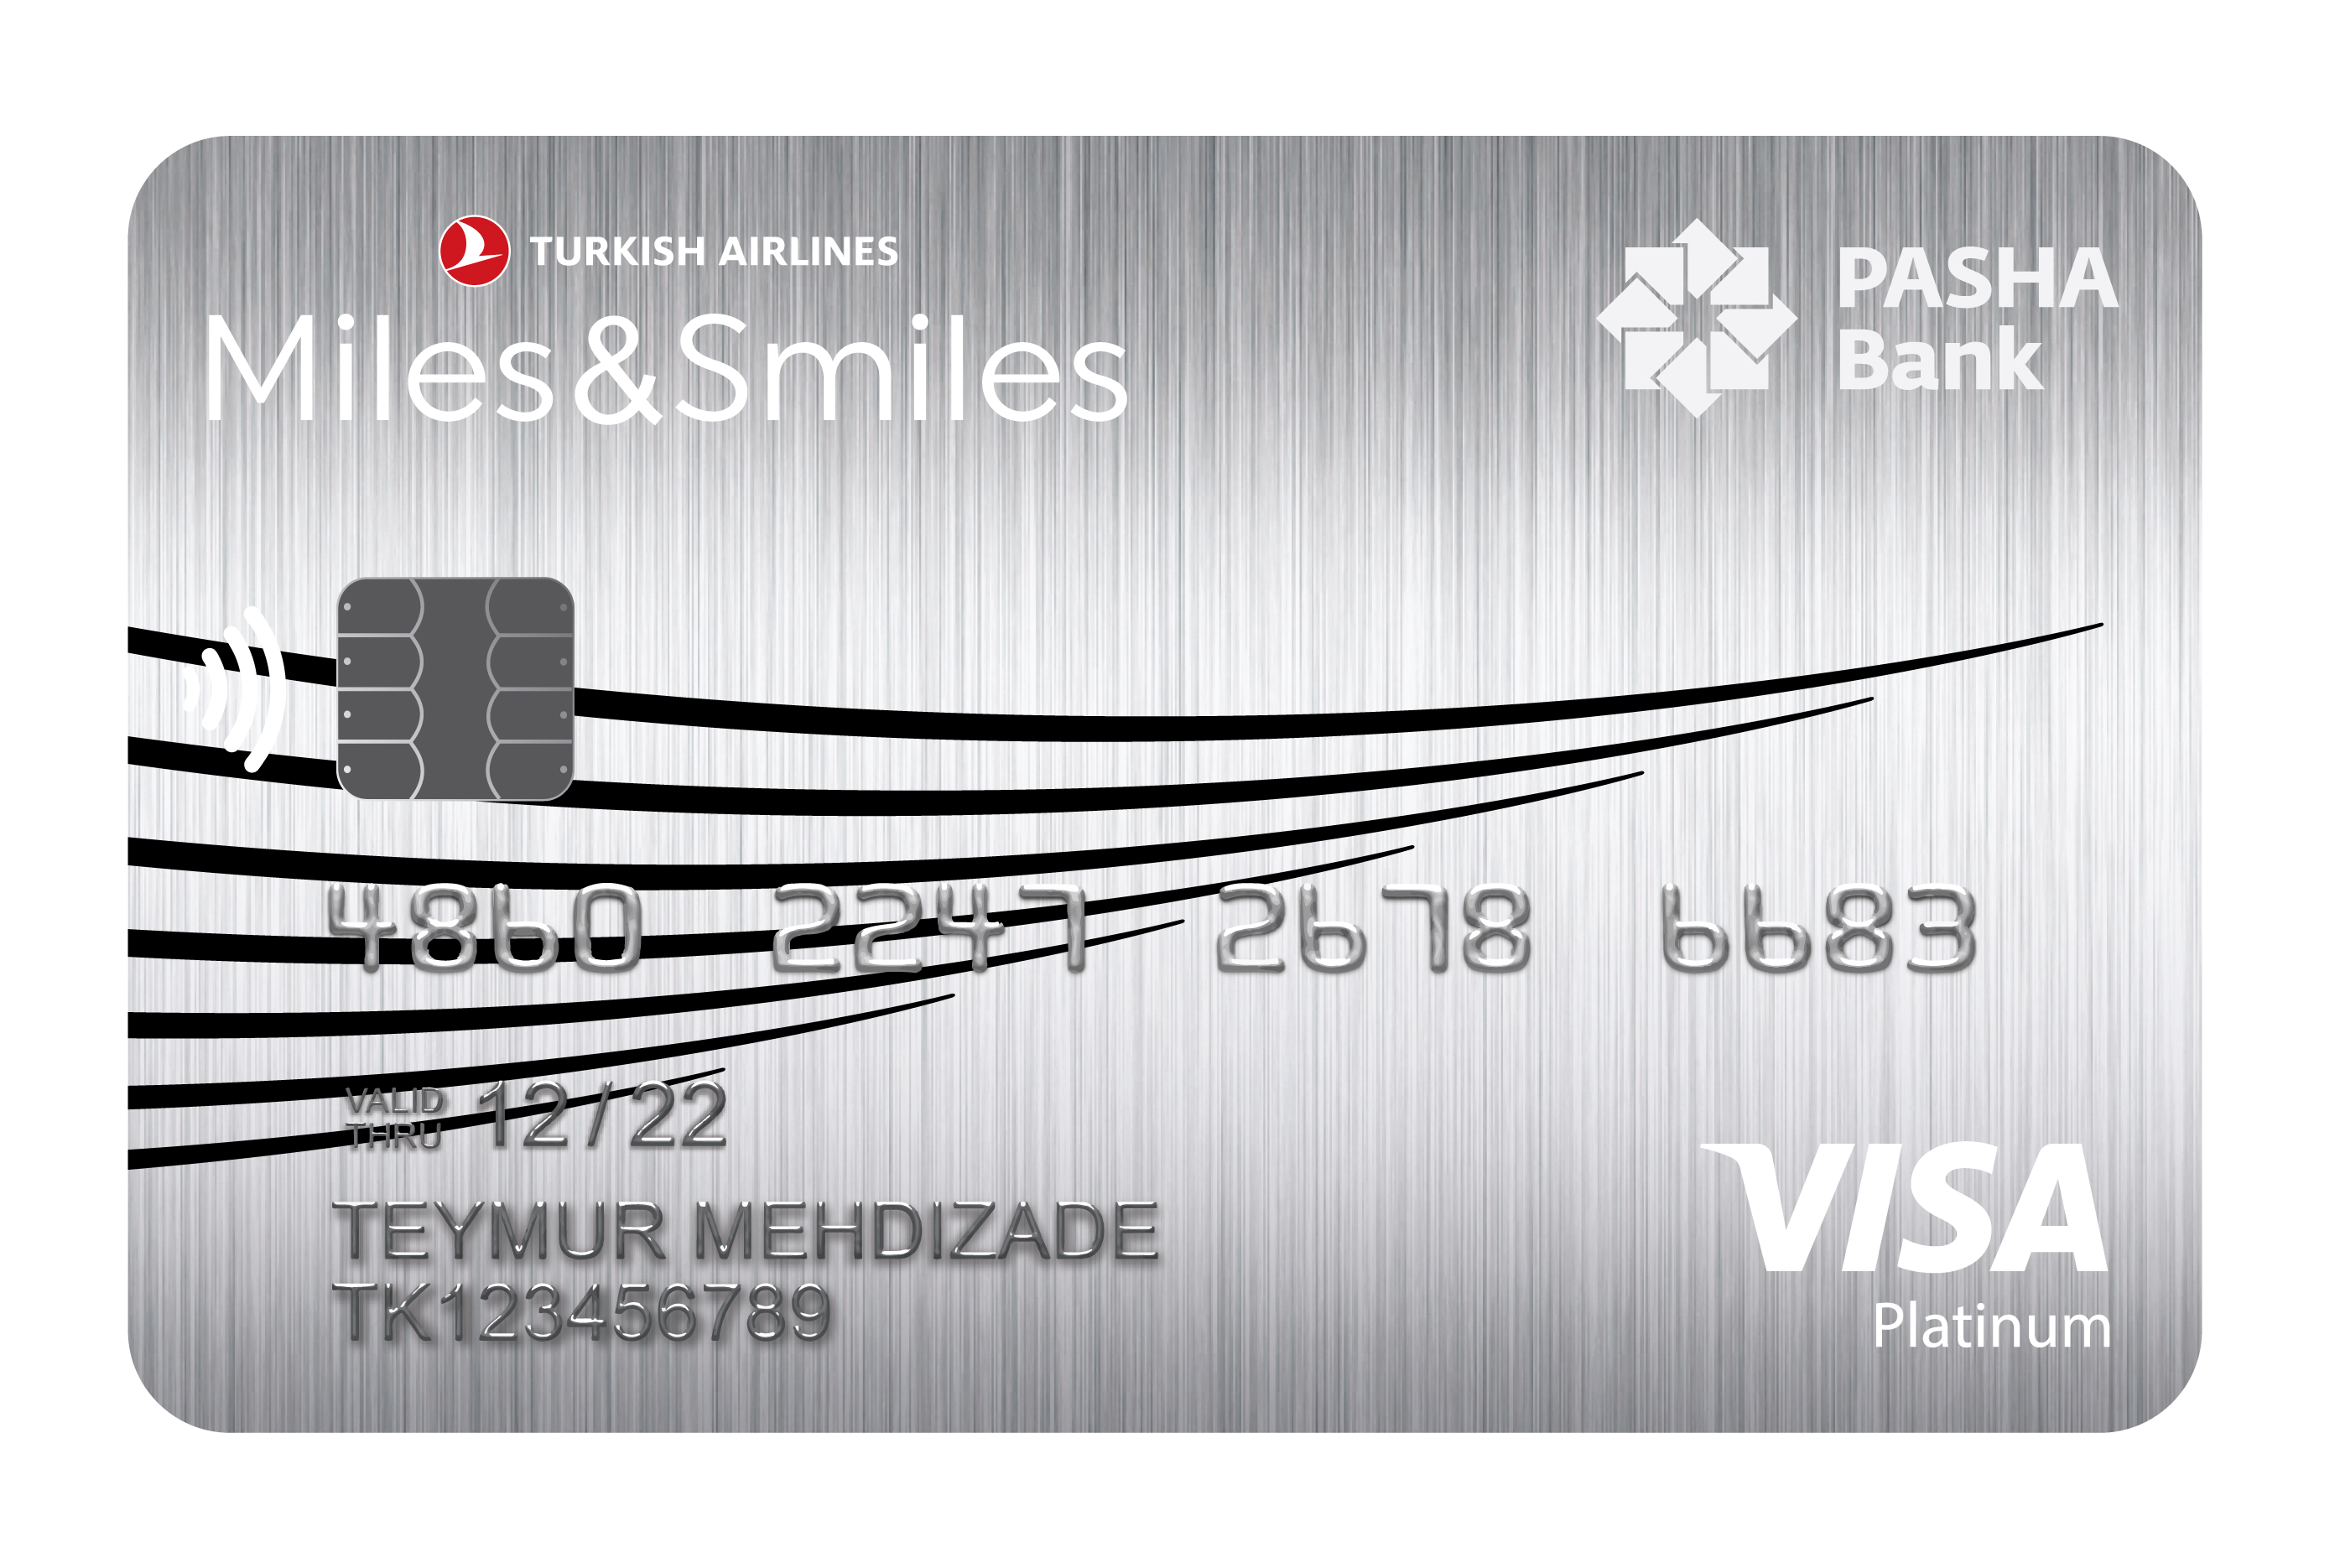 PB_M&S_VISA-Platinum2_with-logo.jpg (1.57 MB)